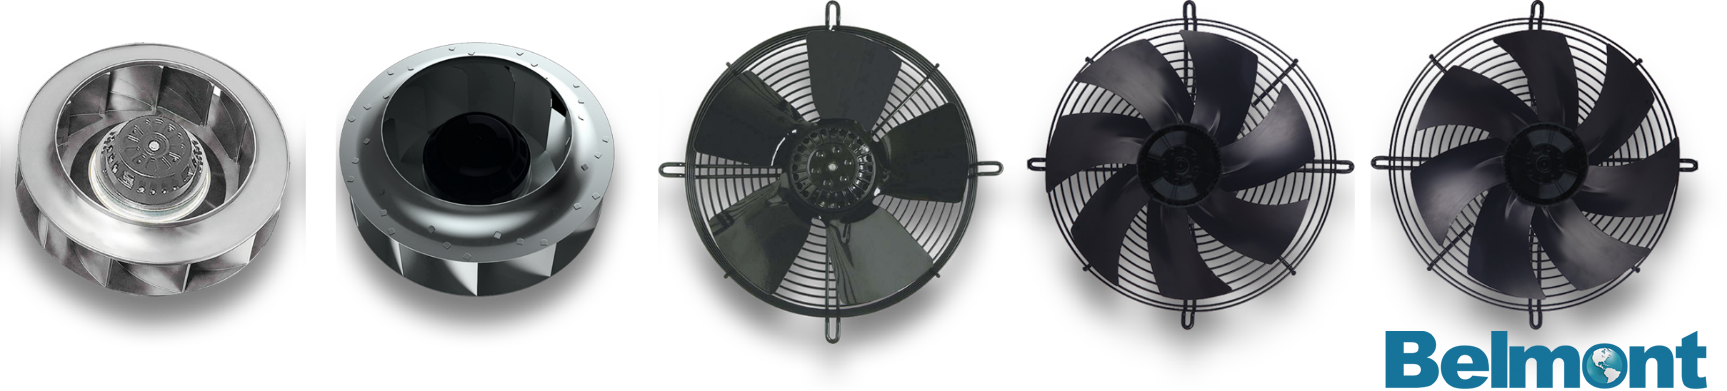 Working principle of high-powered smoke exhaust fan